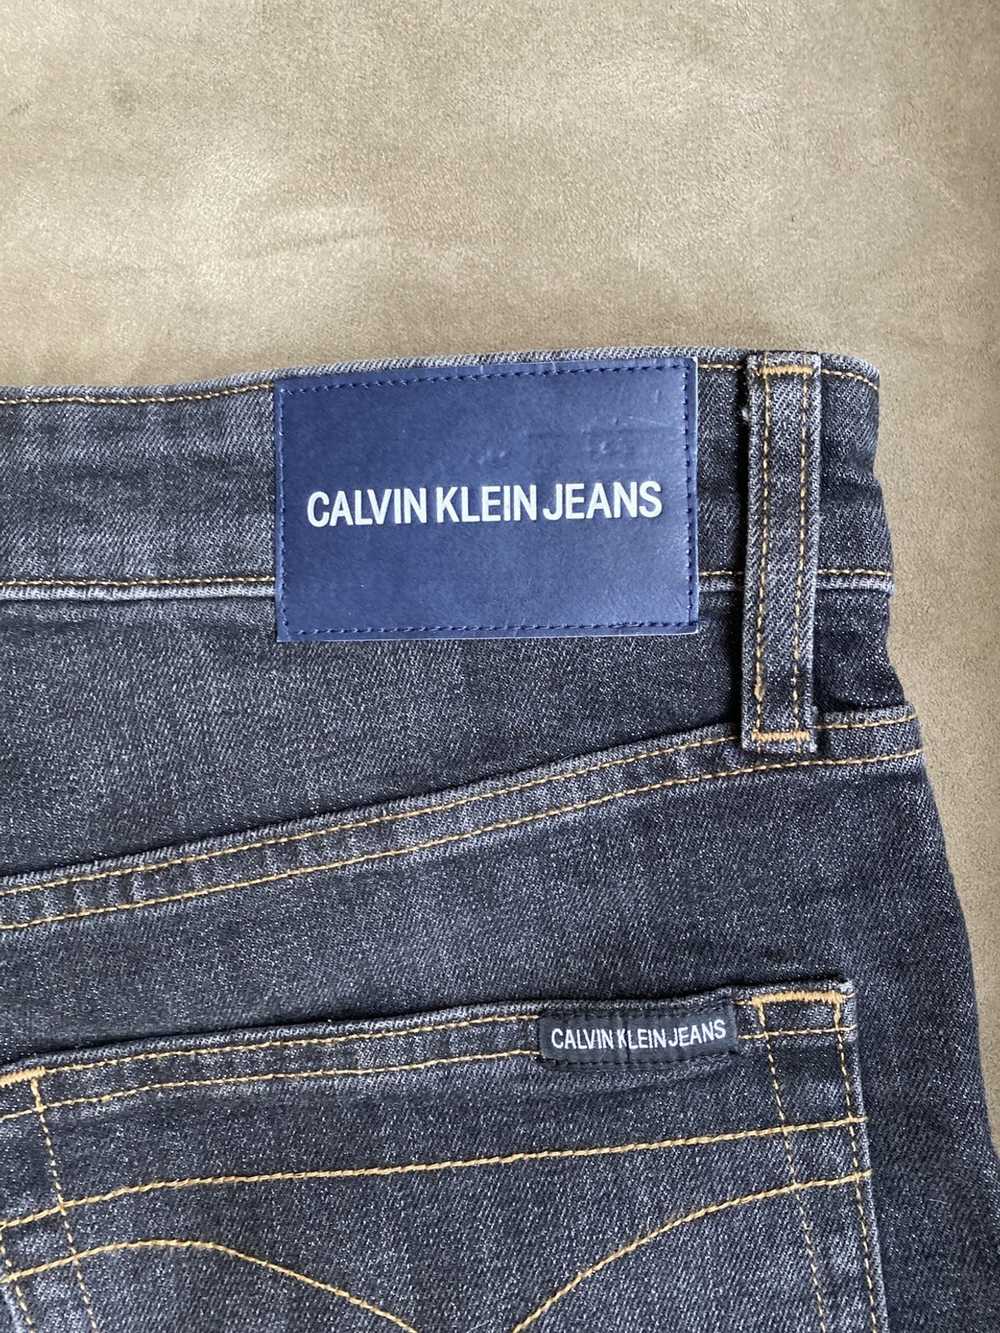 Calvin Klein Calvin Klein Jeans Black - image 3